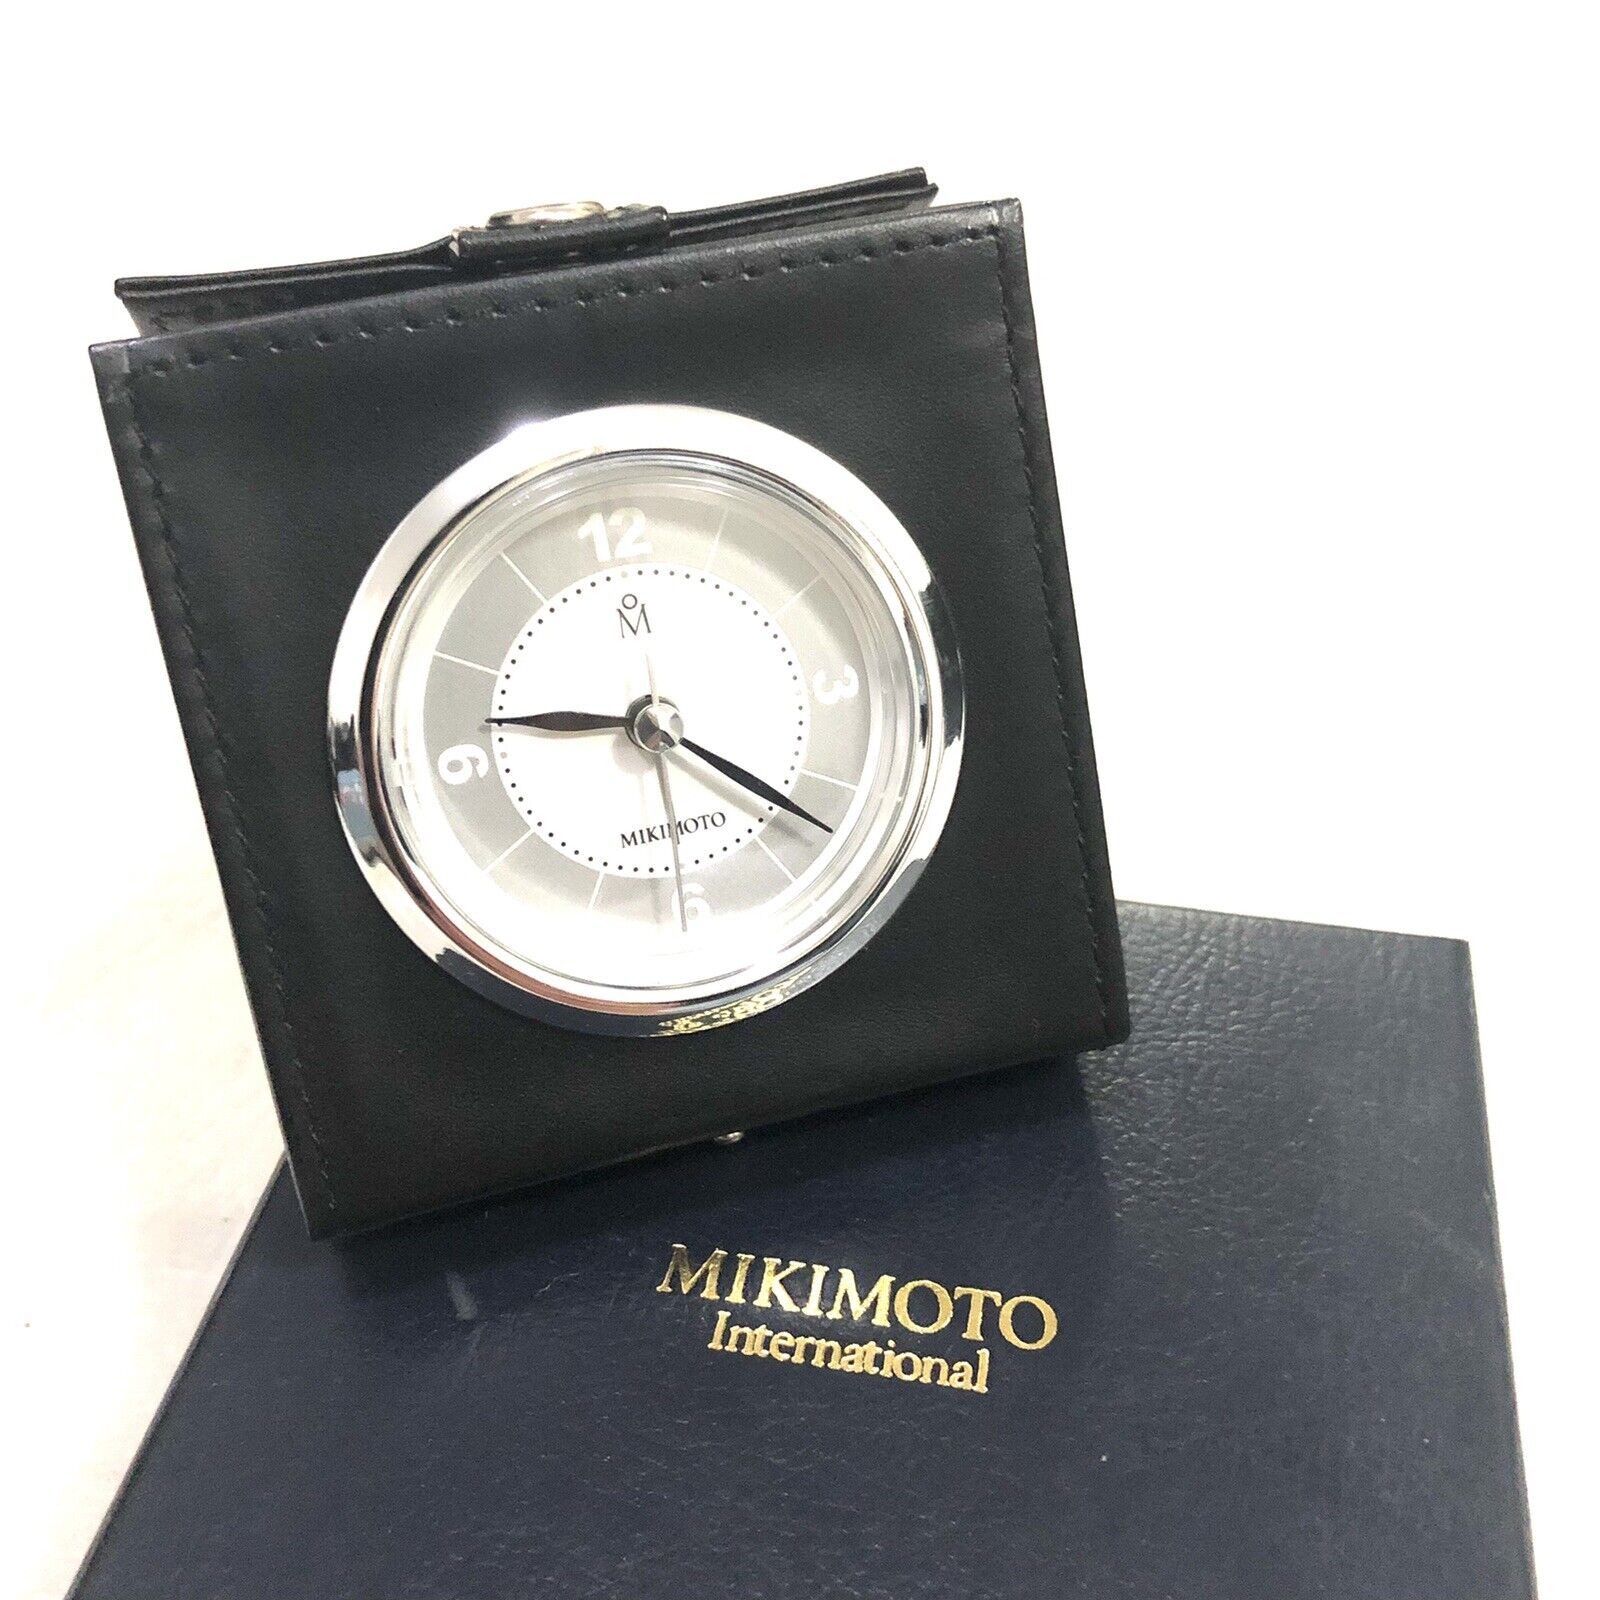 Mikimoto International Japan Silver Leather Square Desk Clock NEW Authentic